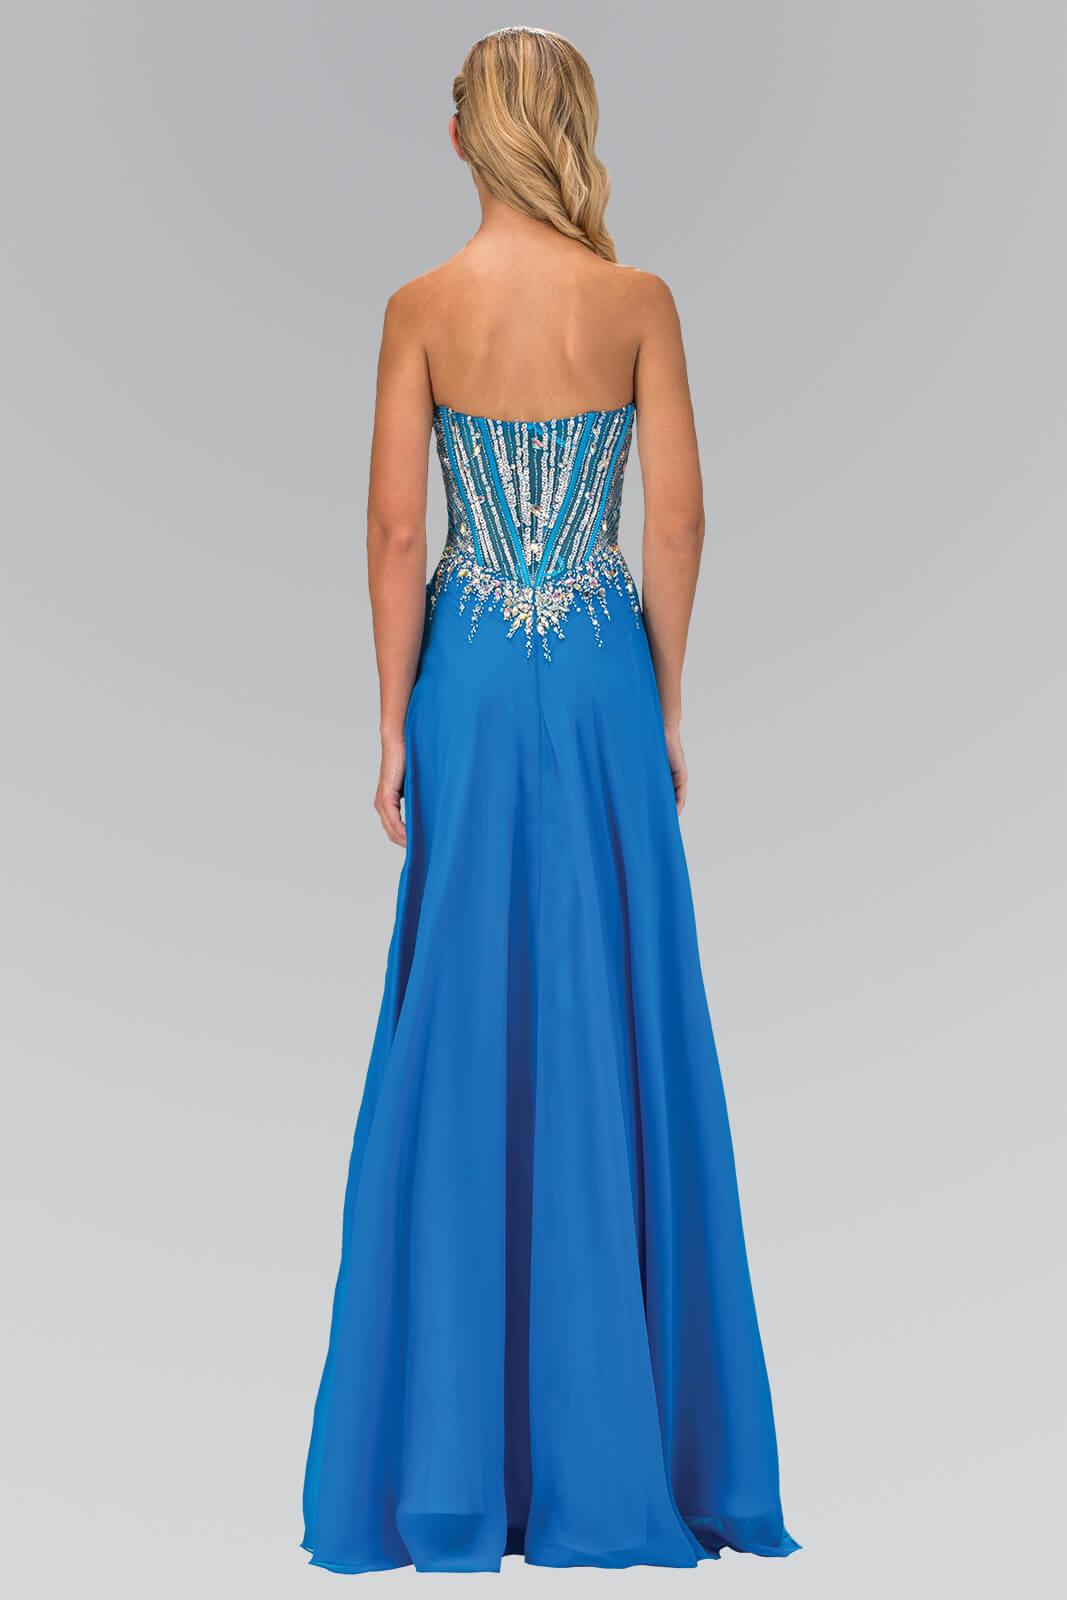 Prom Long Strapless Chiffon Formal Dress - The Dress Outlet Elizabeth K